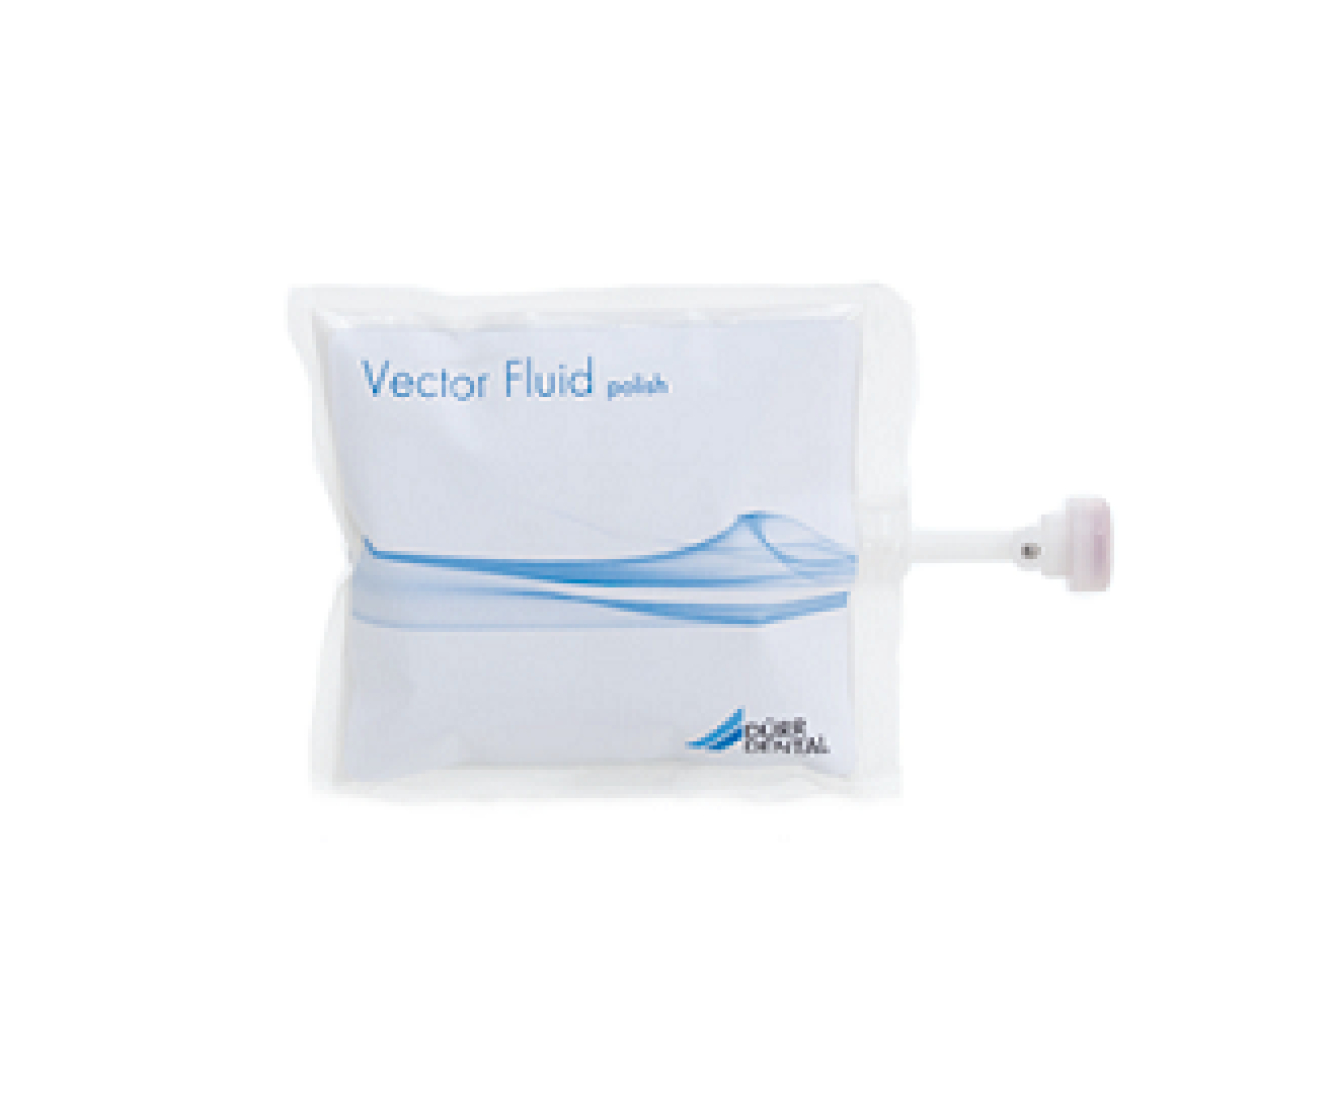 VECTOR FLUID POLISH - полировочная суспензия к аппарату Vector, Durr Dental (Германия)